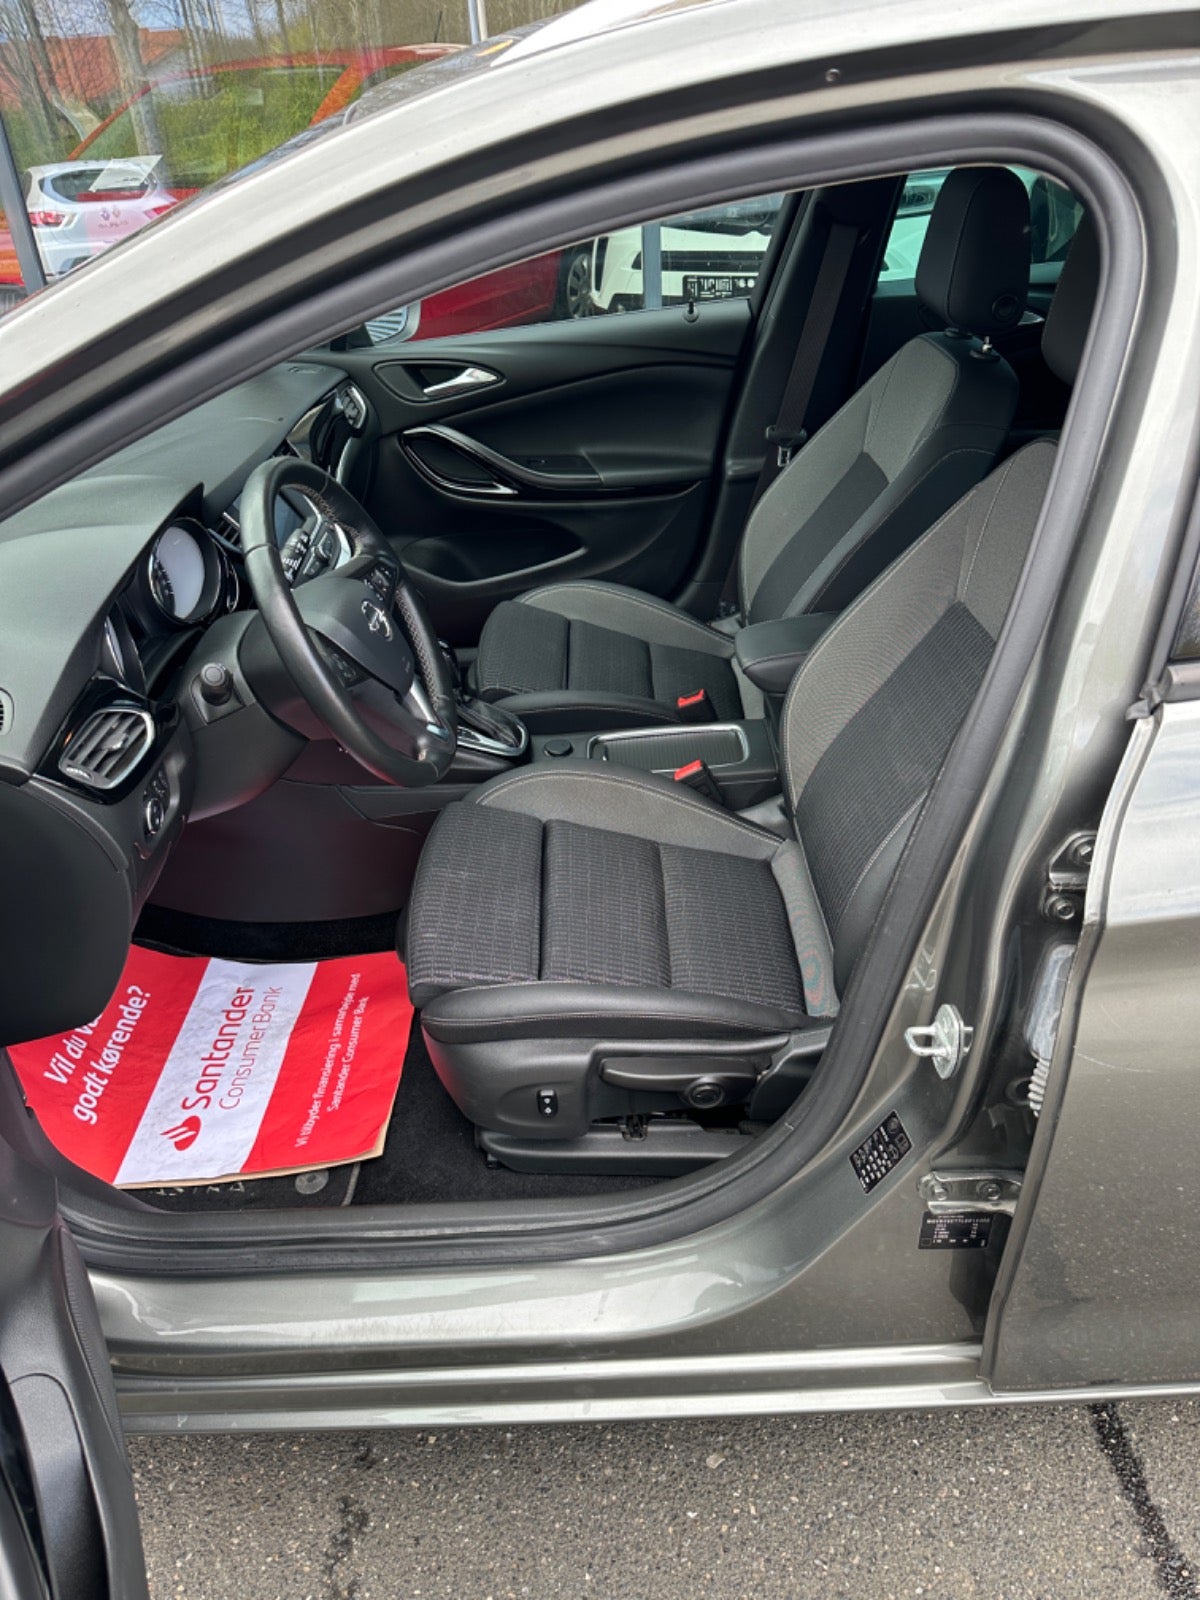 Opel Astra 2020